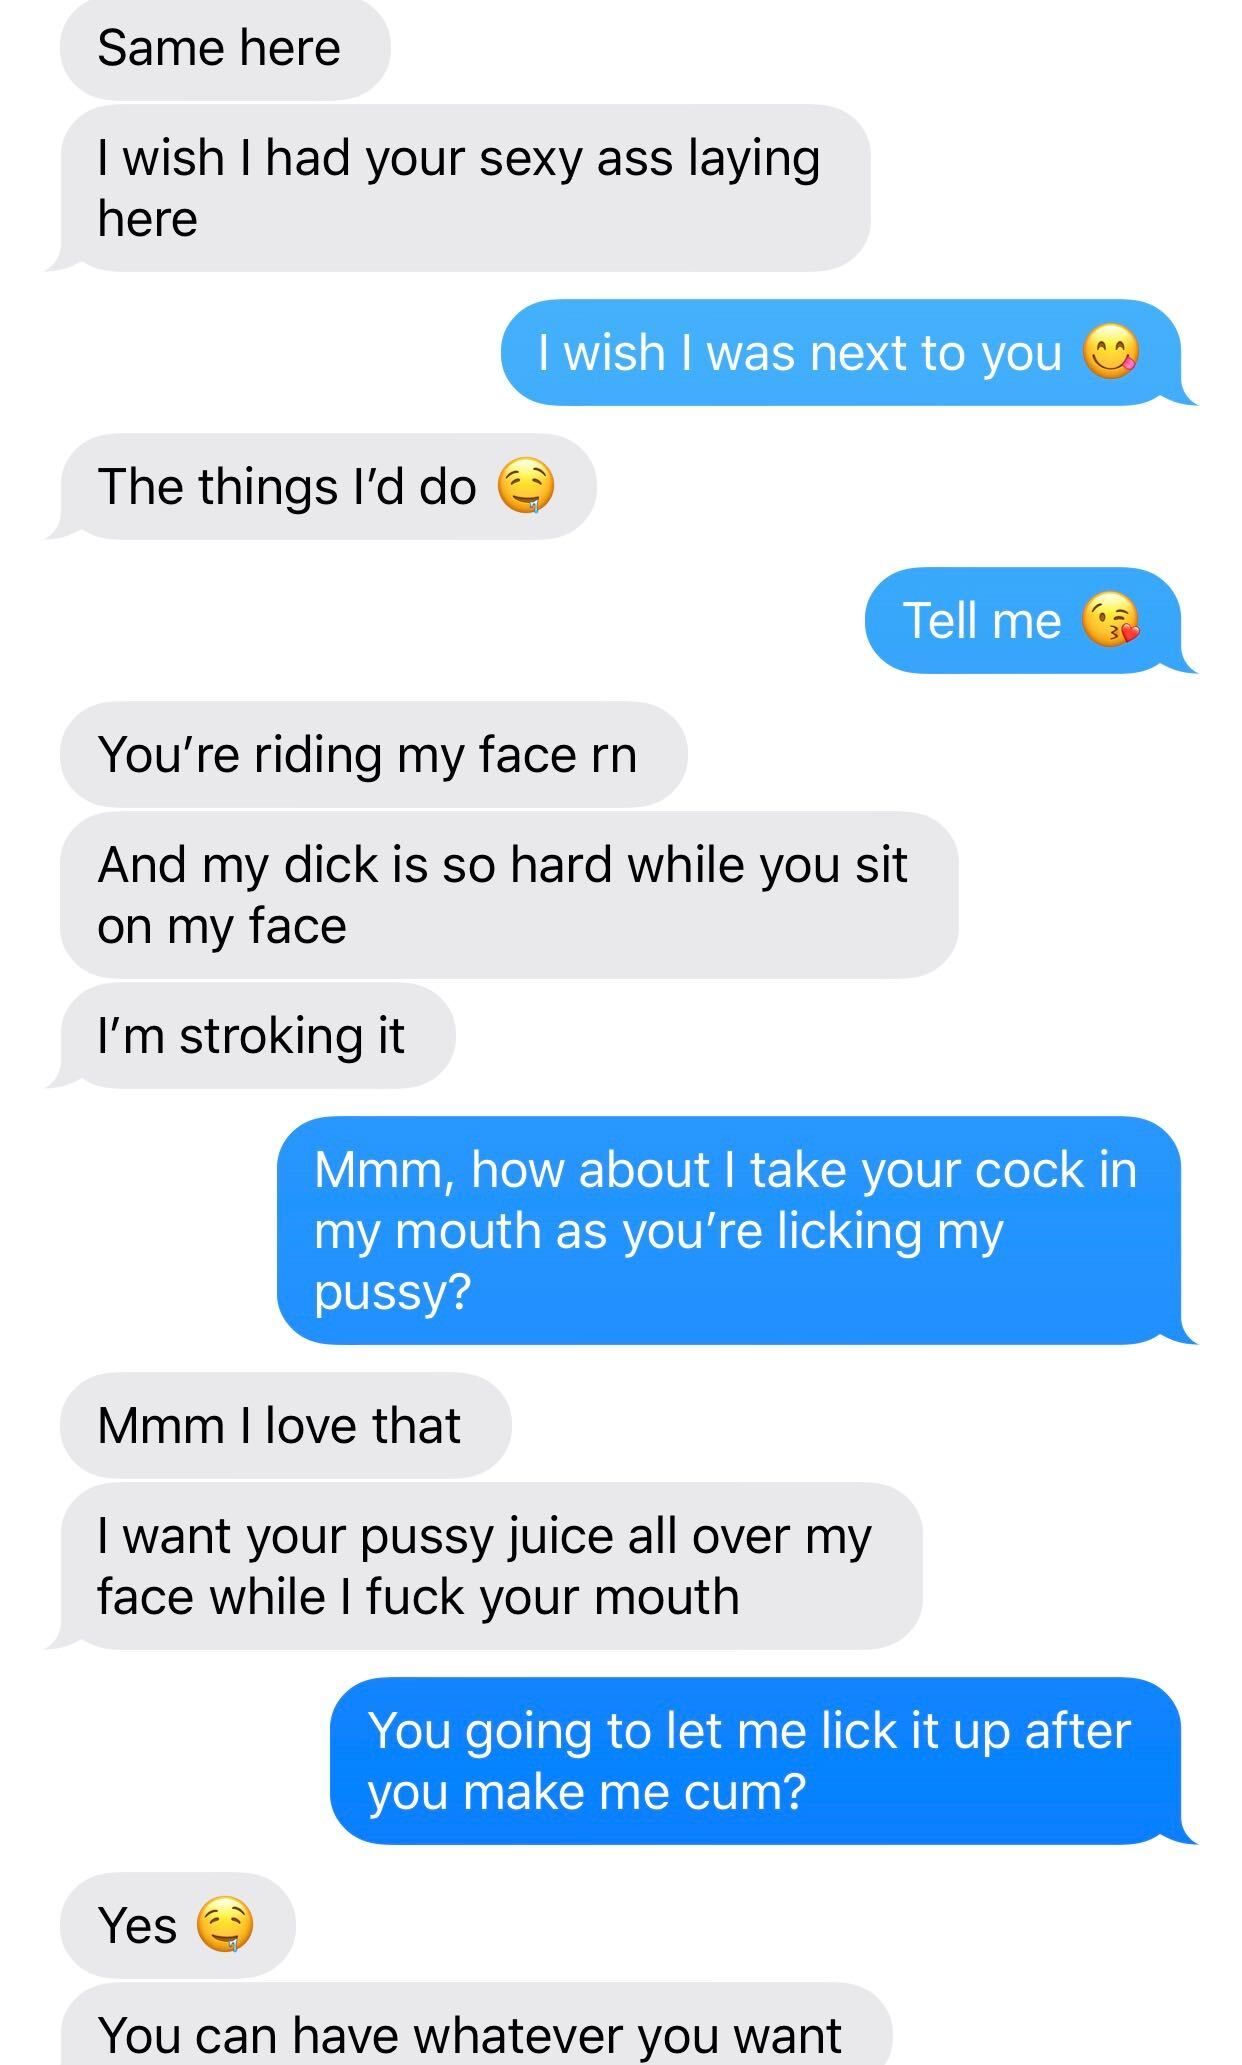 sexiest text to speech voice